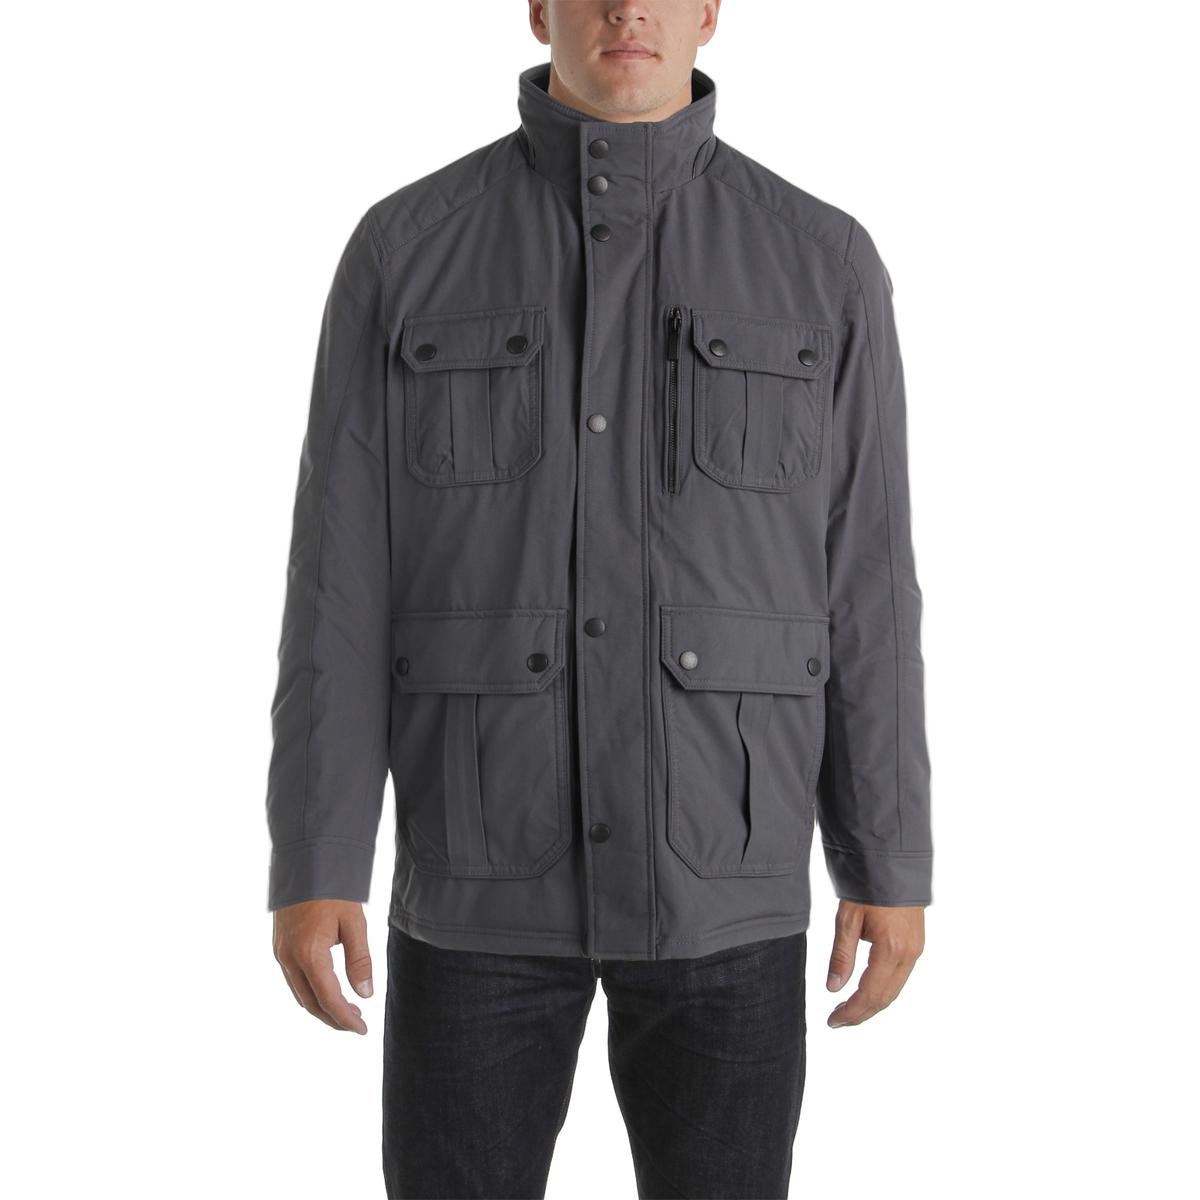 Hawke & Co. 4349 Mens Insulated Field Coat Outerwear BHFO | eBay